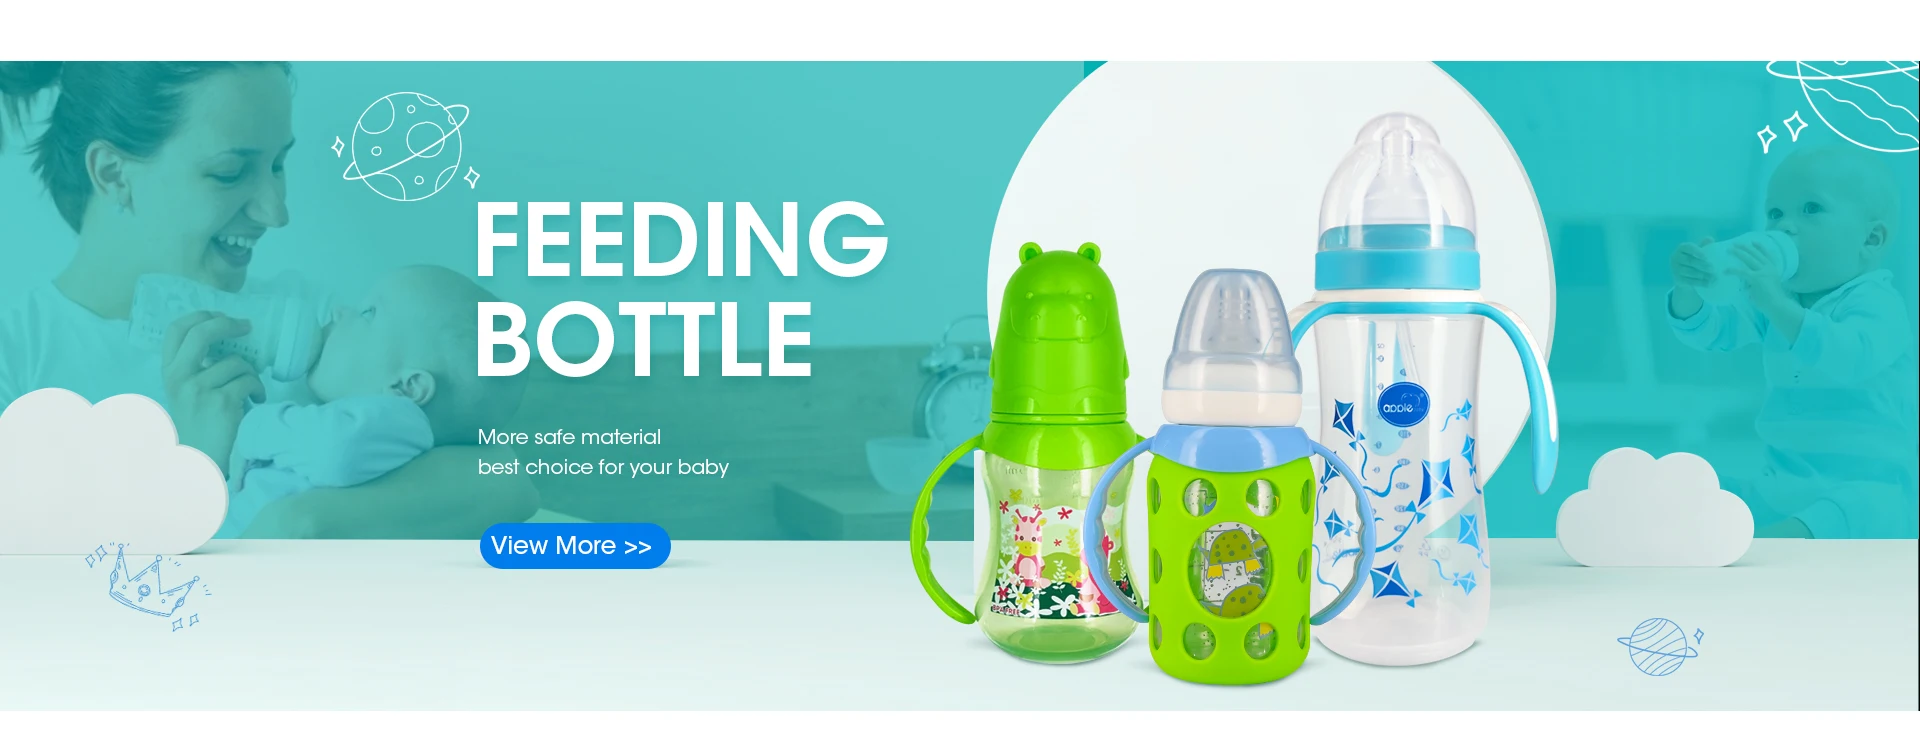 Guangzhou John's Baby Products Company Limited - feeding bottle, nipple